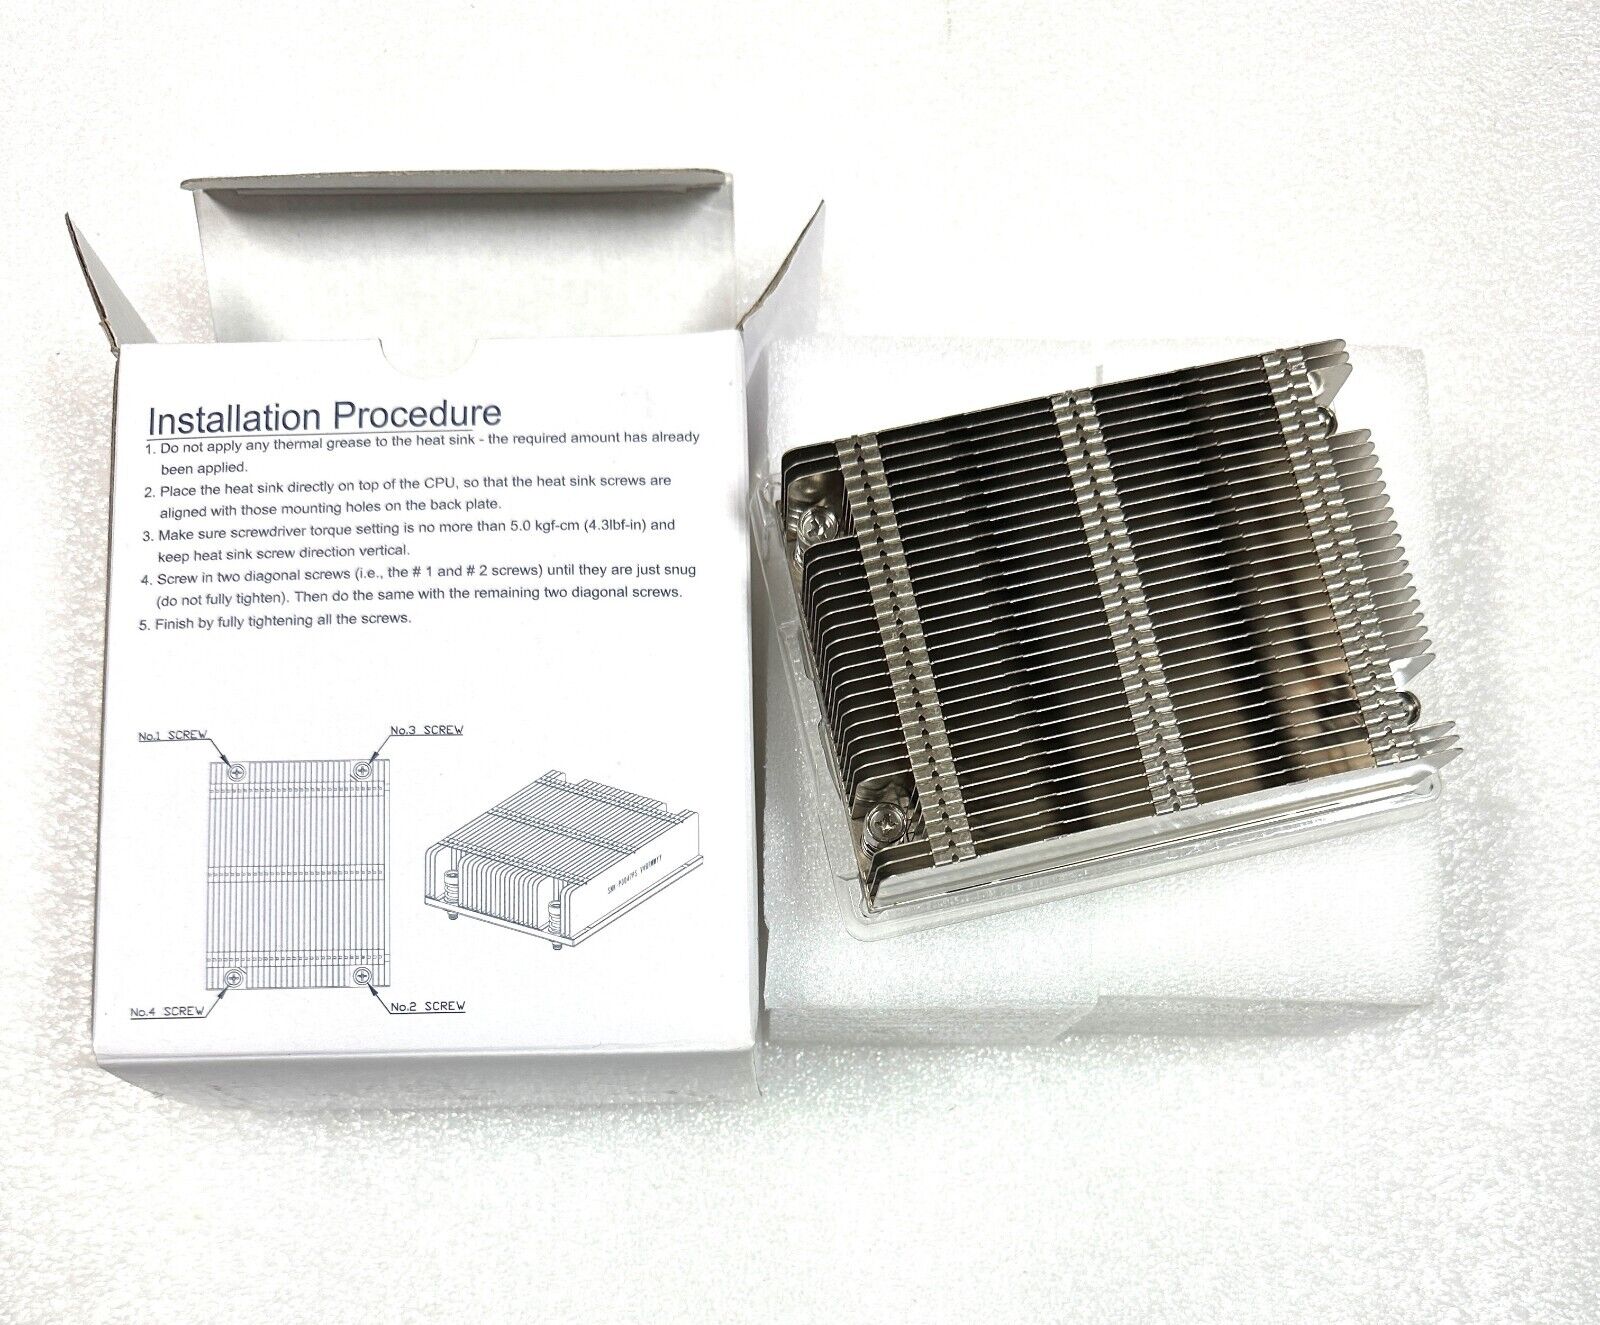 New SNK-P0047PS 1U Passive CPU Heatsink Cooler For CPU Socket LGA 2011